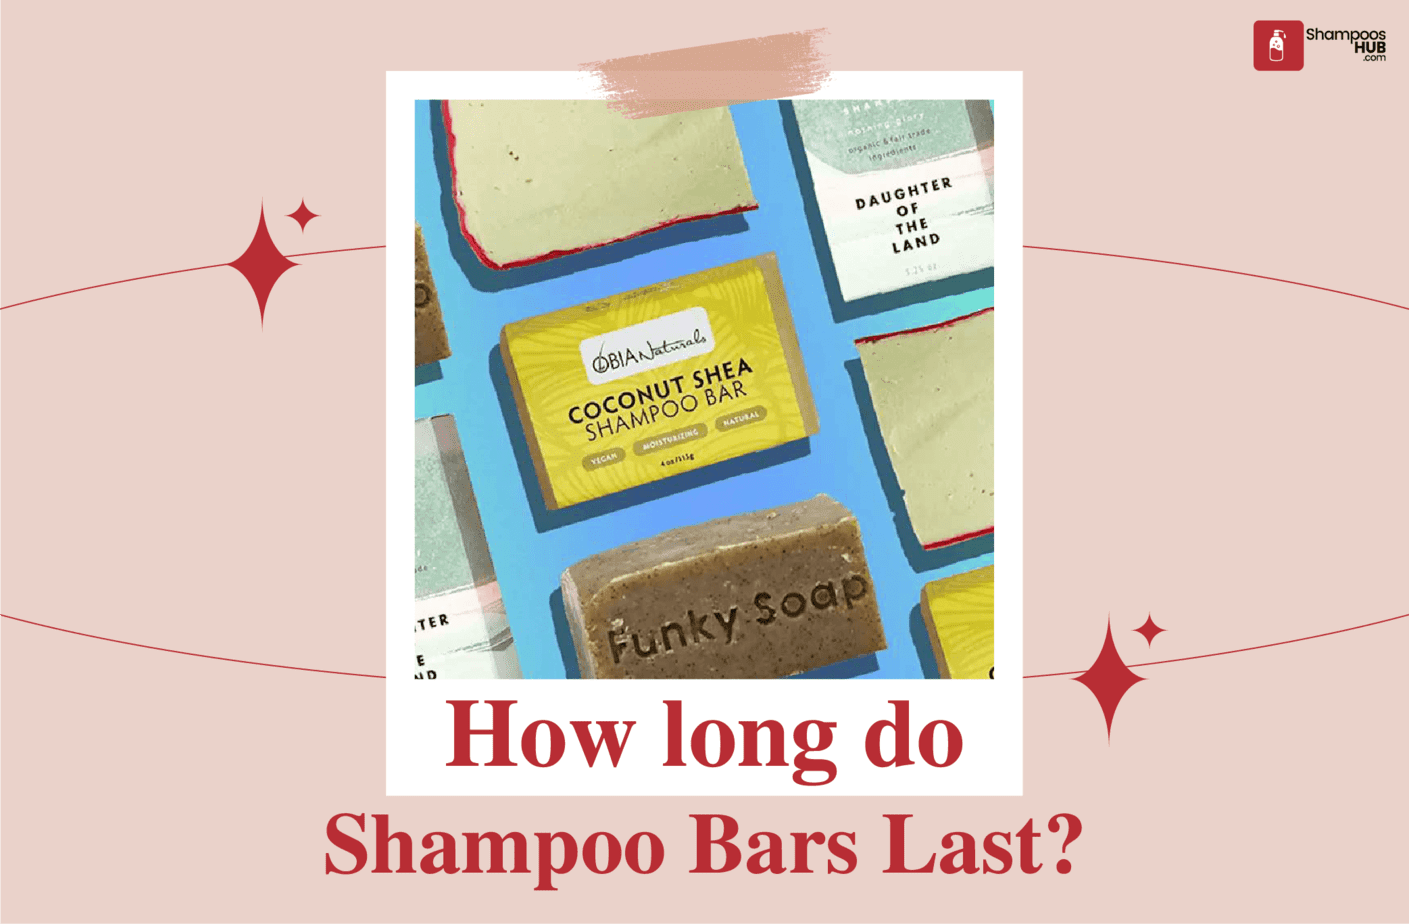 How long do Shampoo Bars Last?